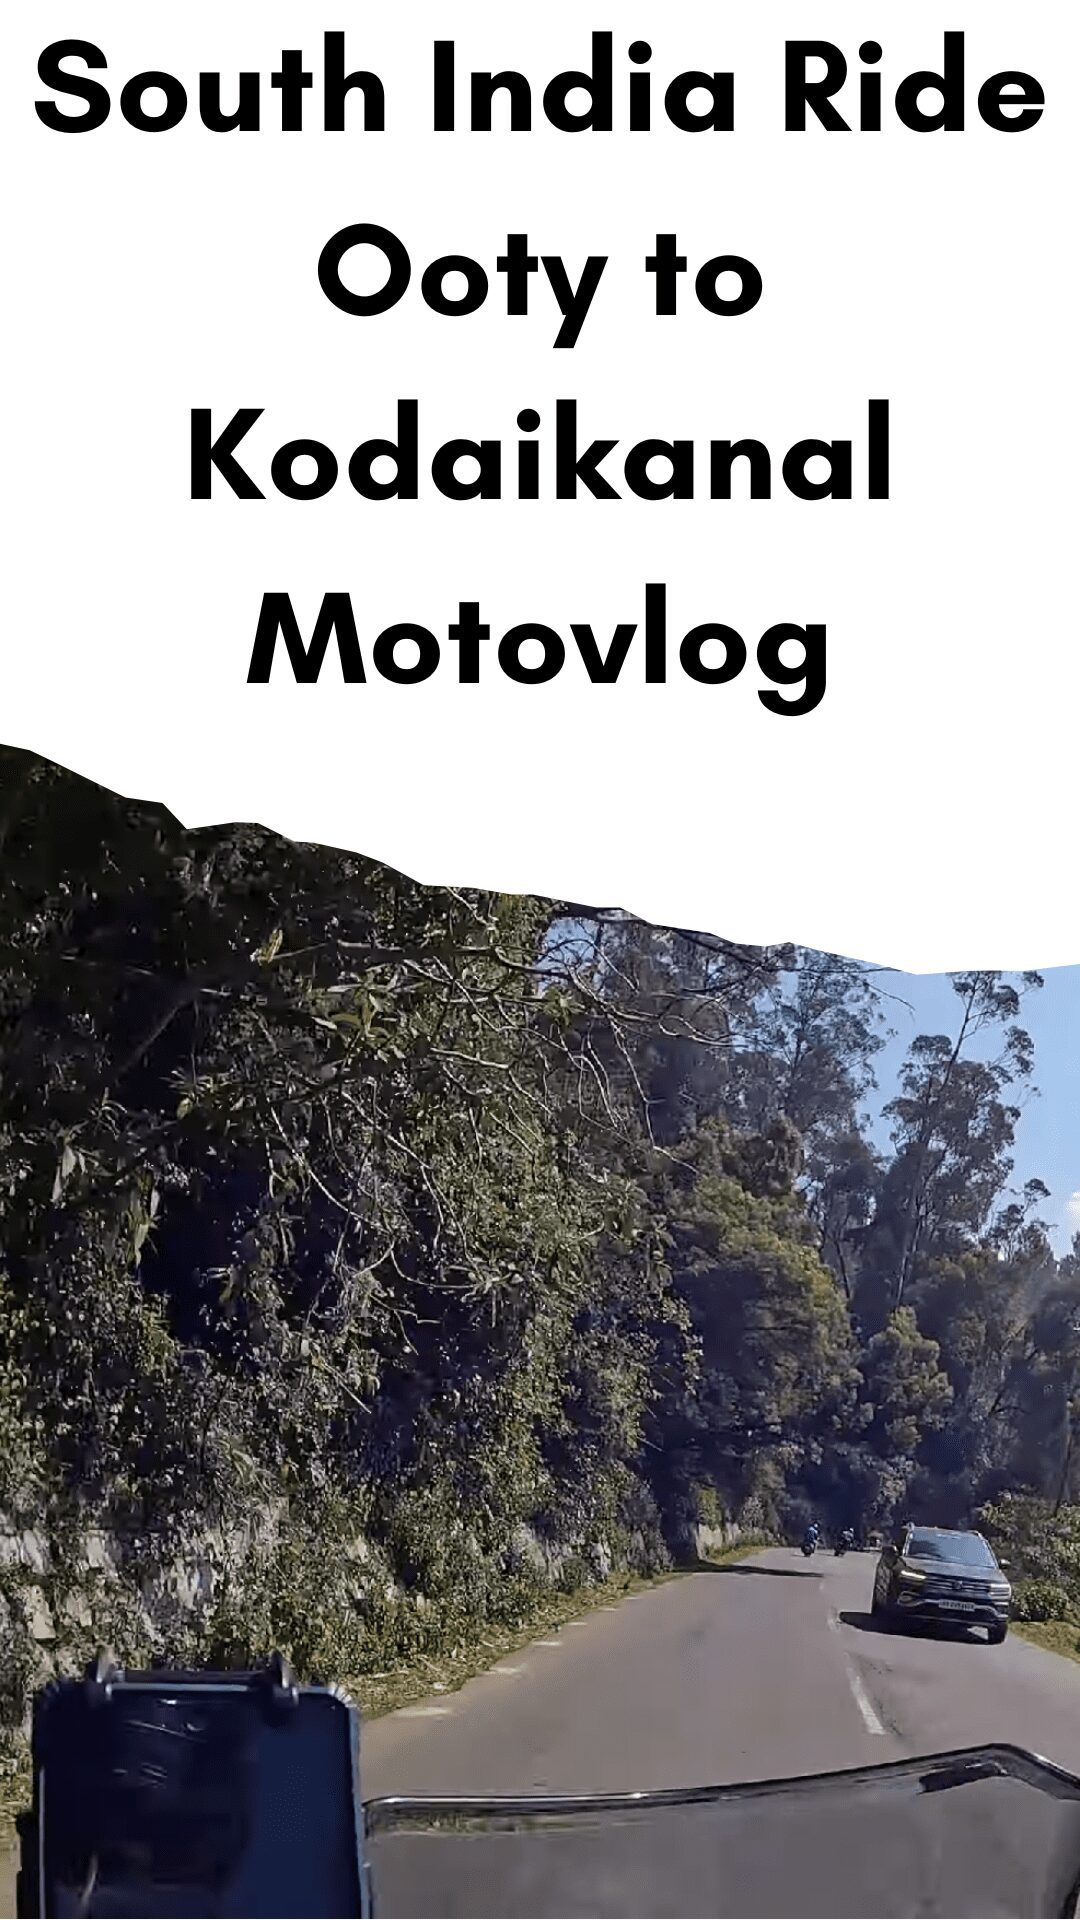 South India Ride Ooty to Kodaikanal Motovlog